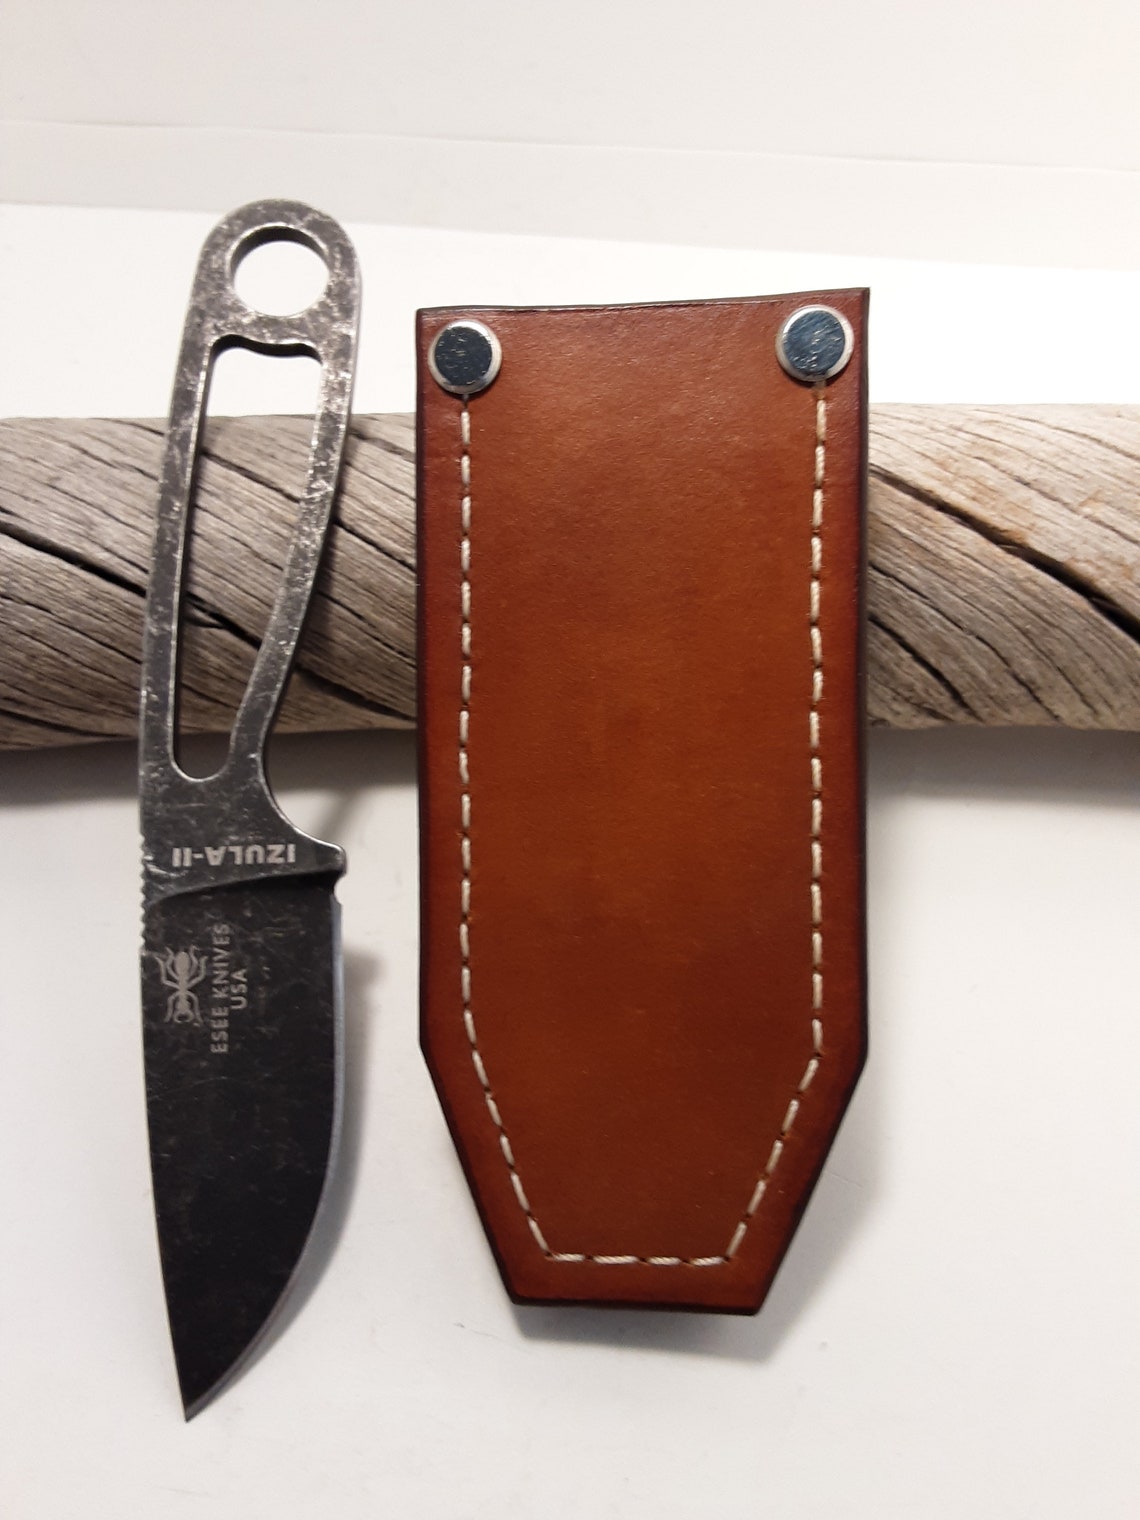 Leather sheath for the ESEE Izula | Etsy